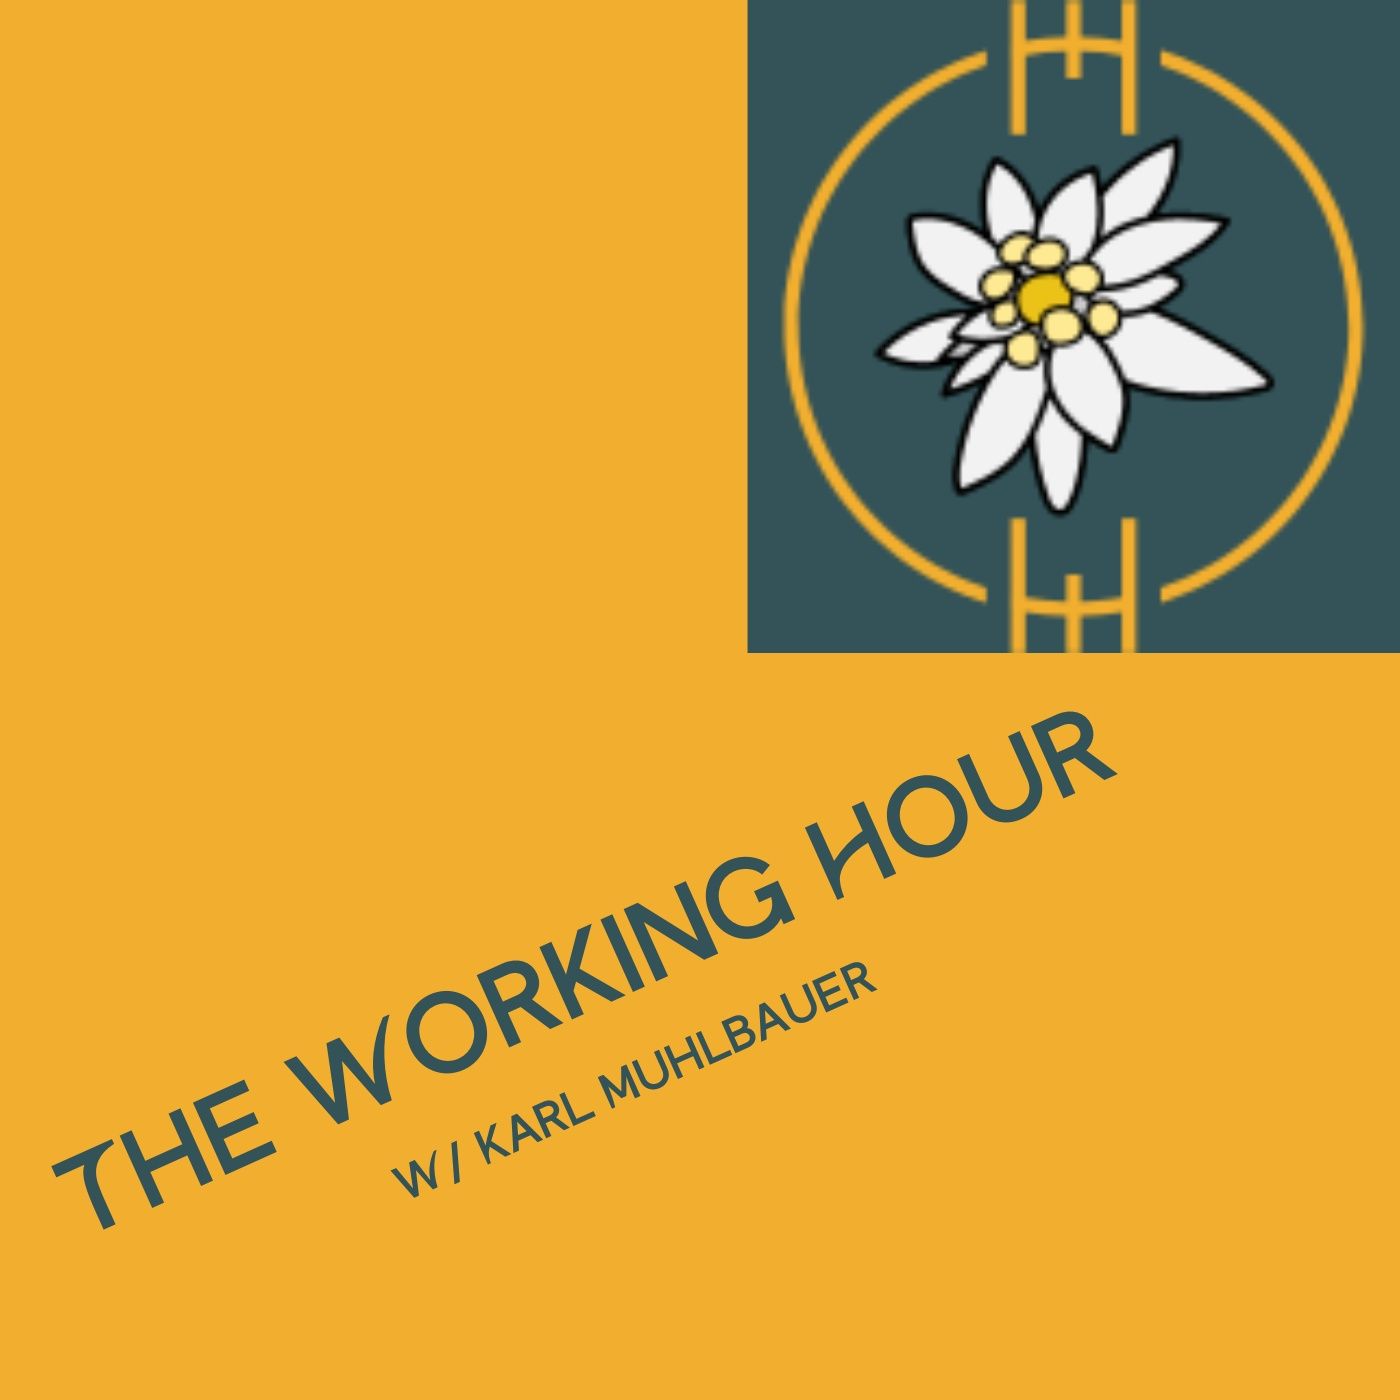 The Working Hour w/Karl Muhlbauer